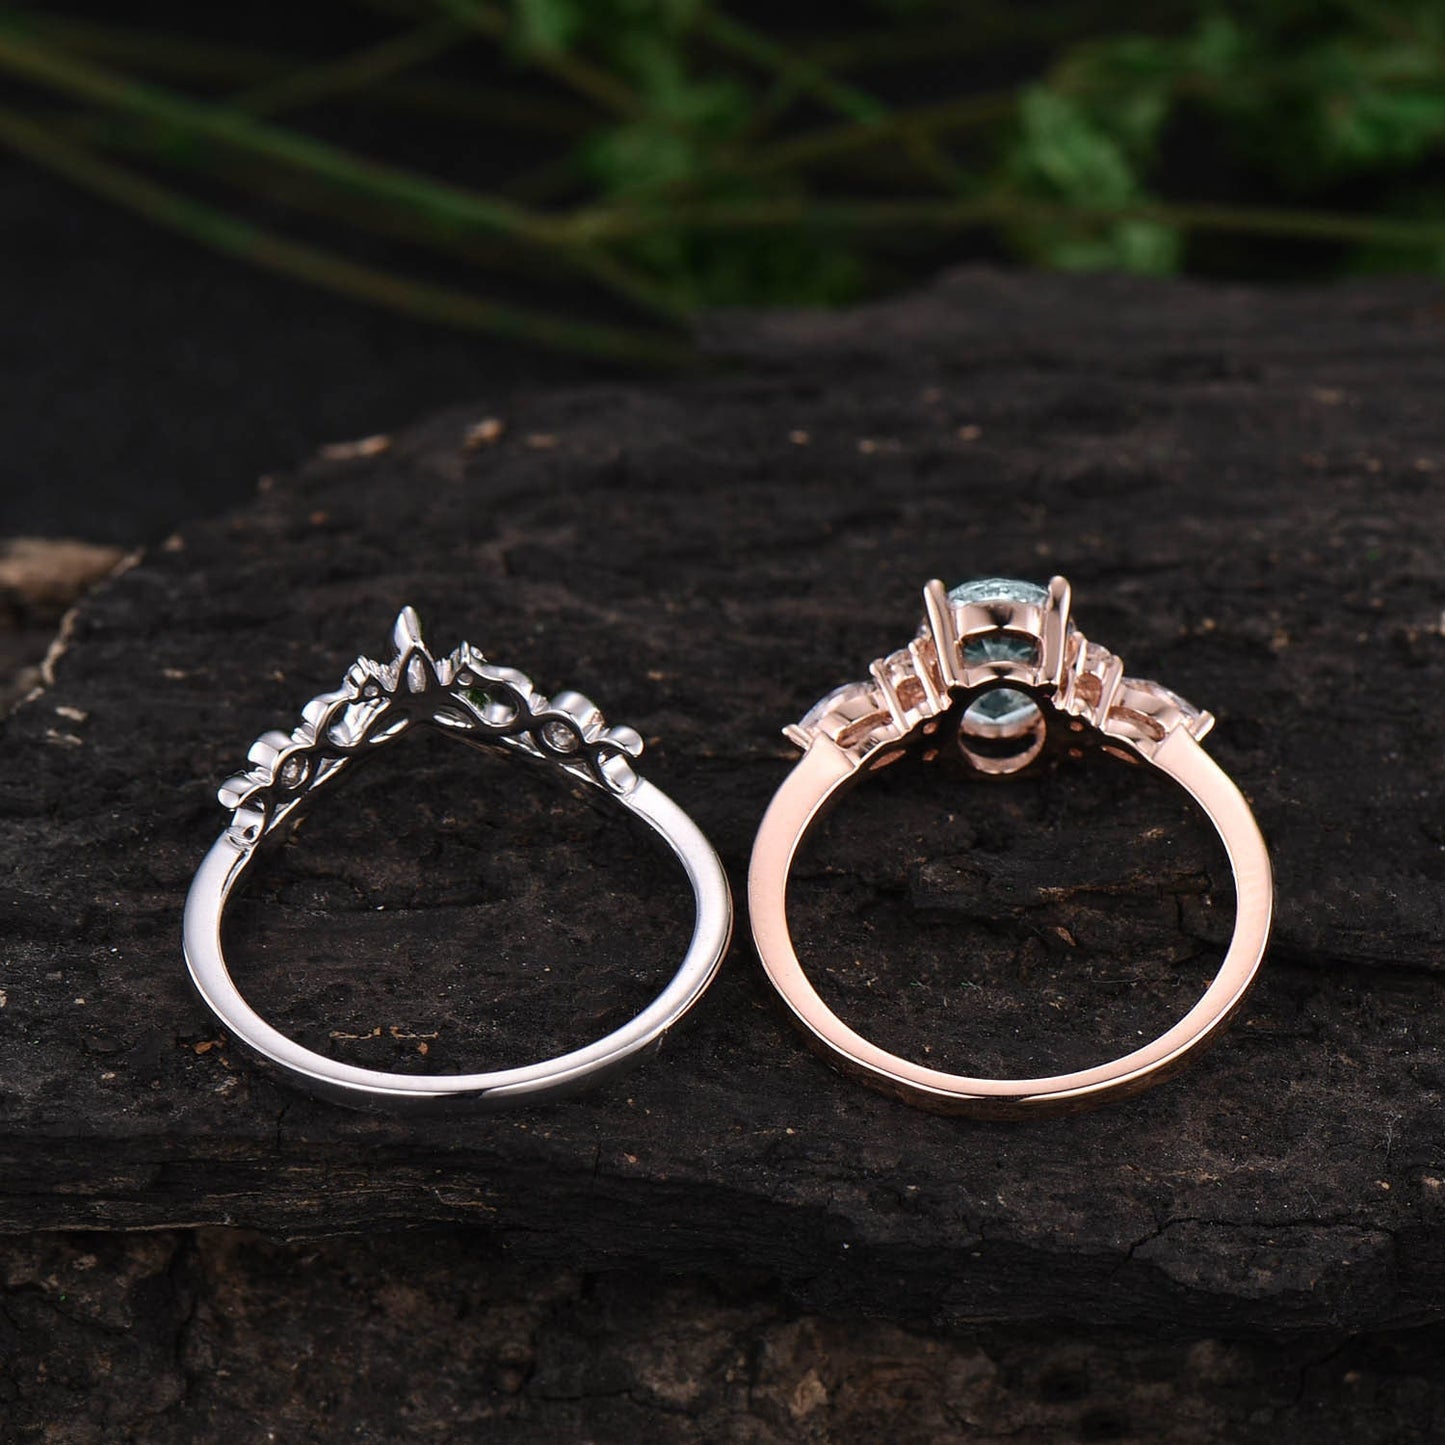 labradorite ring gold sterling silver oval Labradorite engagement ring set art deco vintage marquise moissanite bridal promise ring set gift